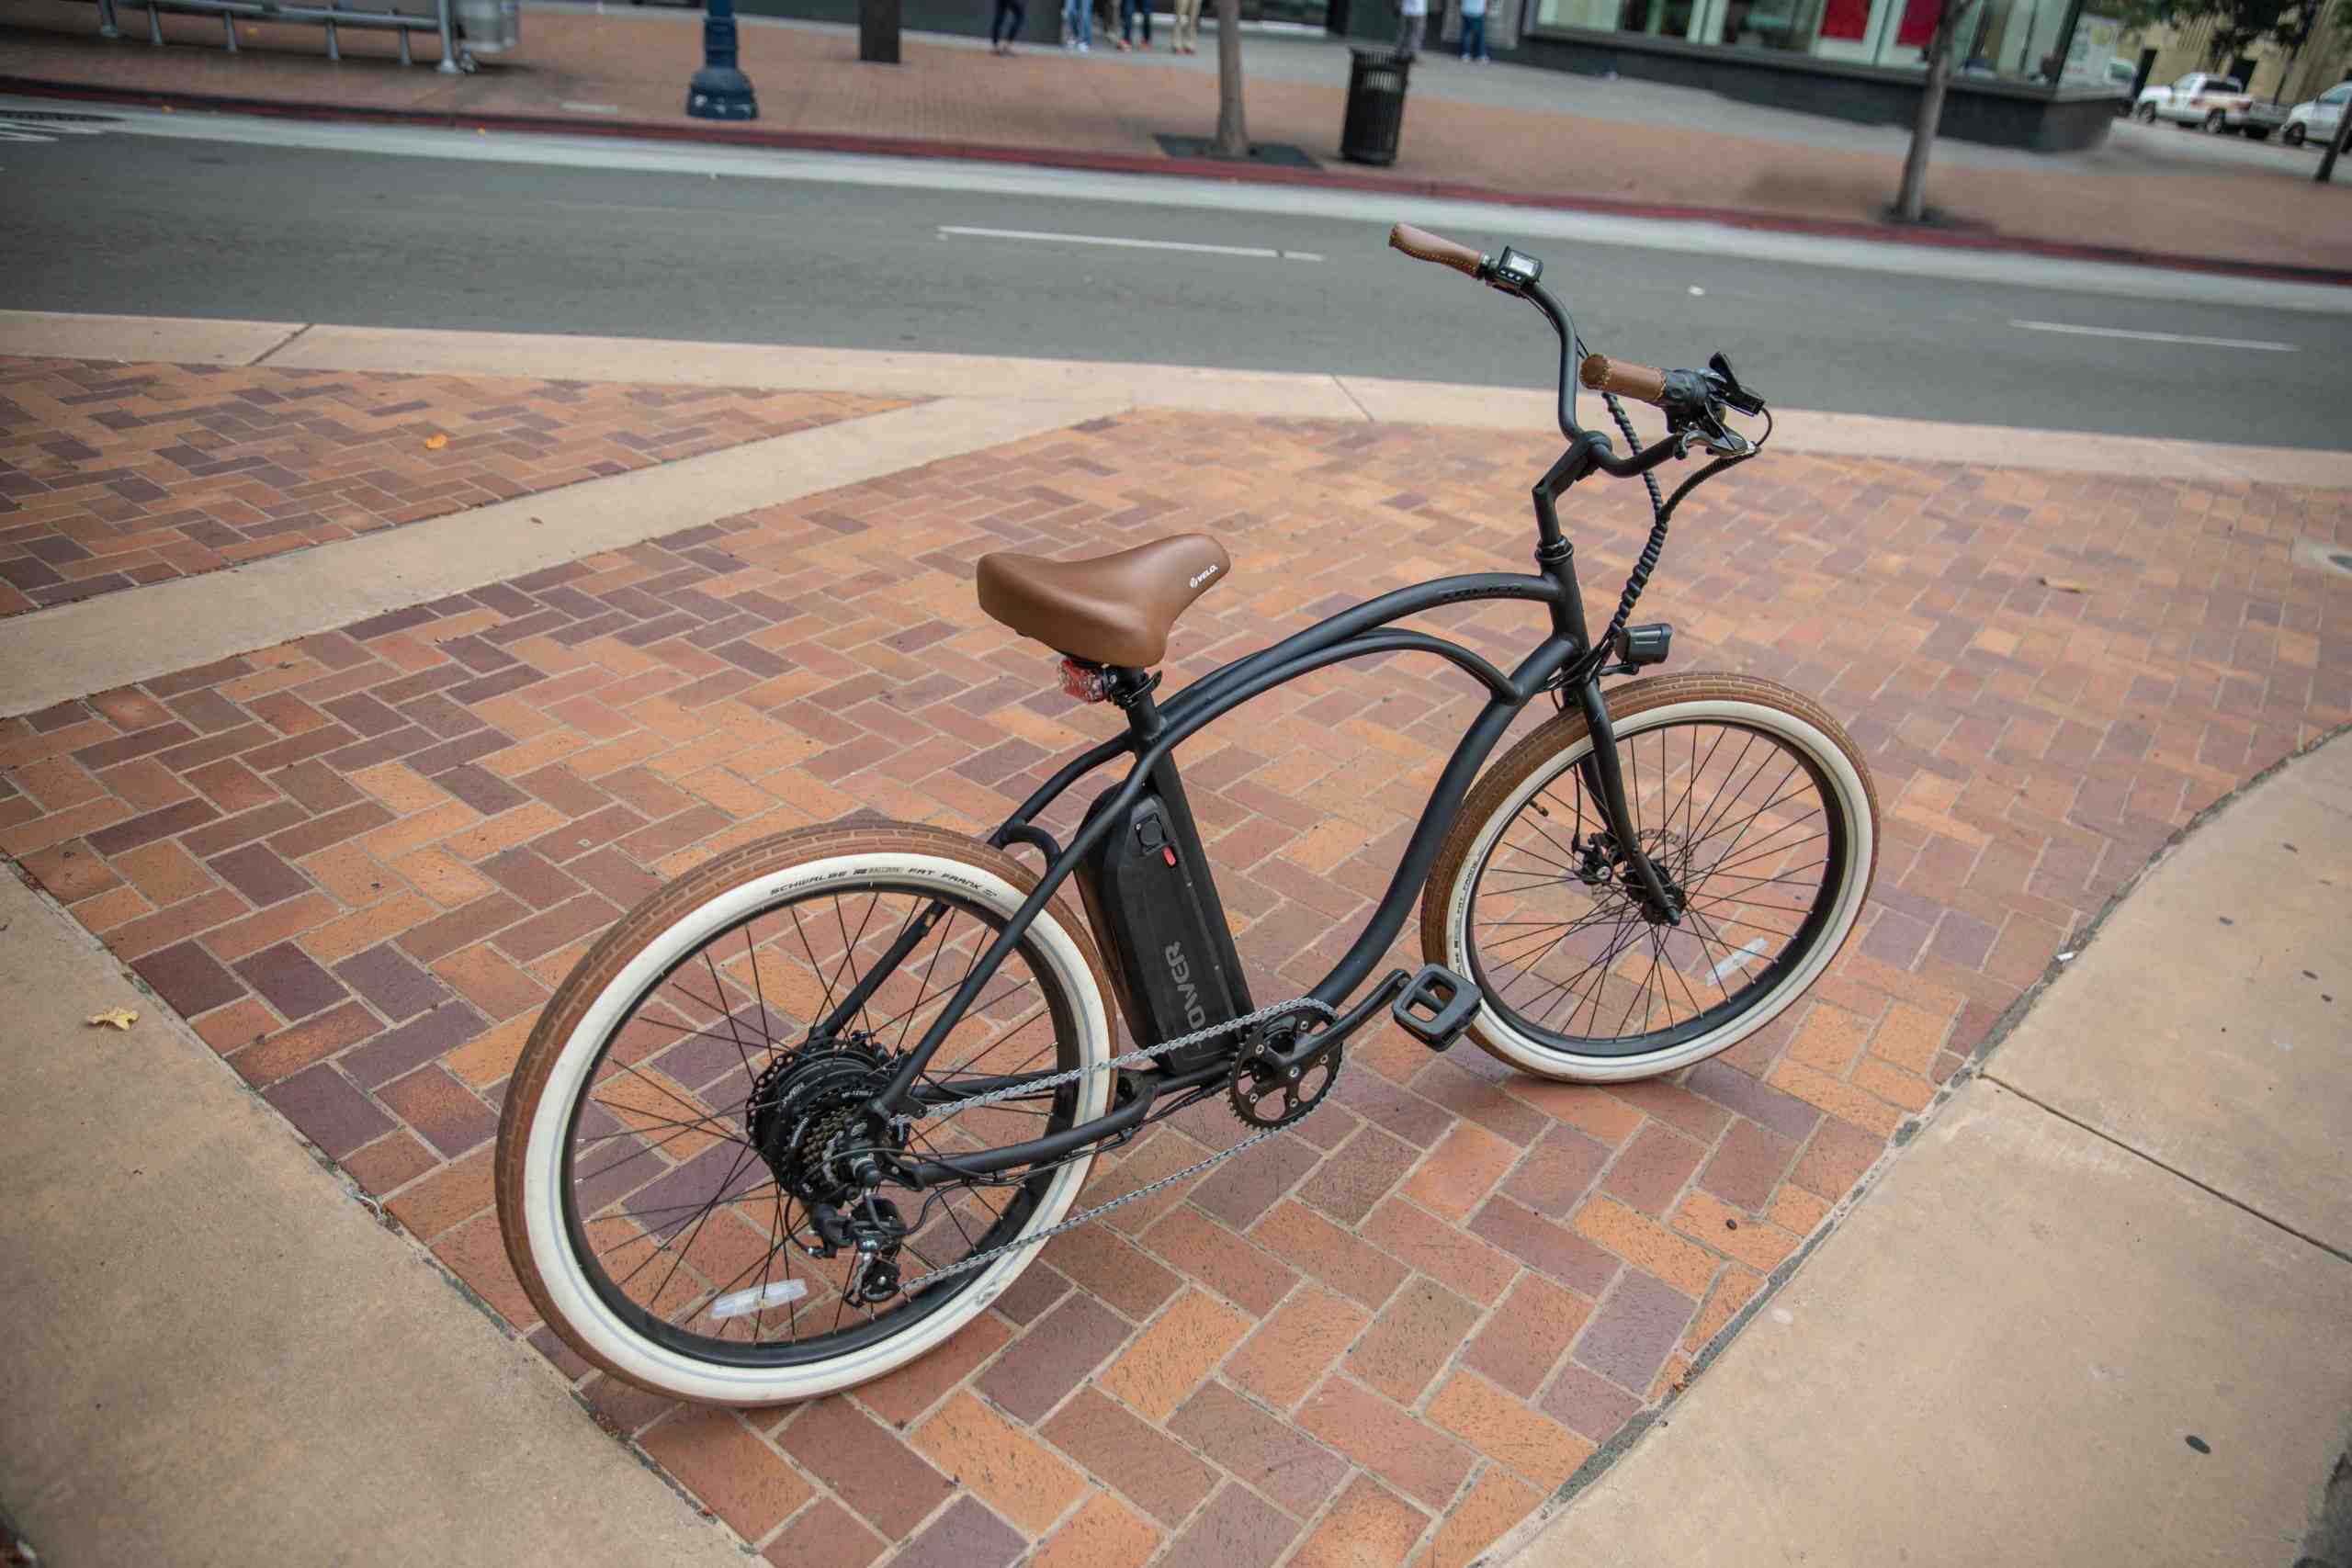 Are motorized bicycles legal in Utah?